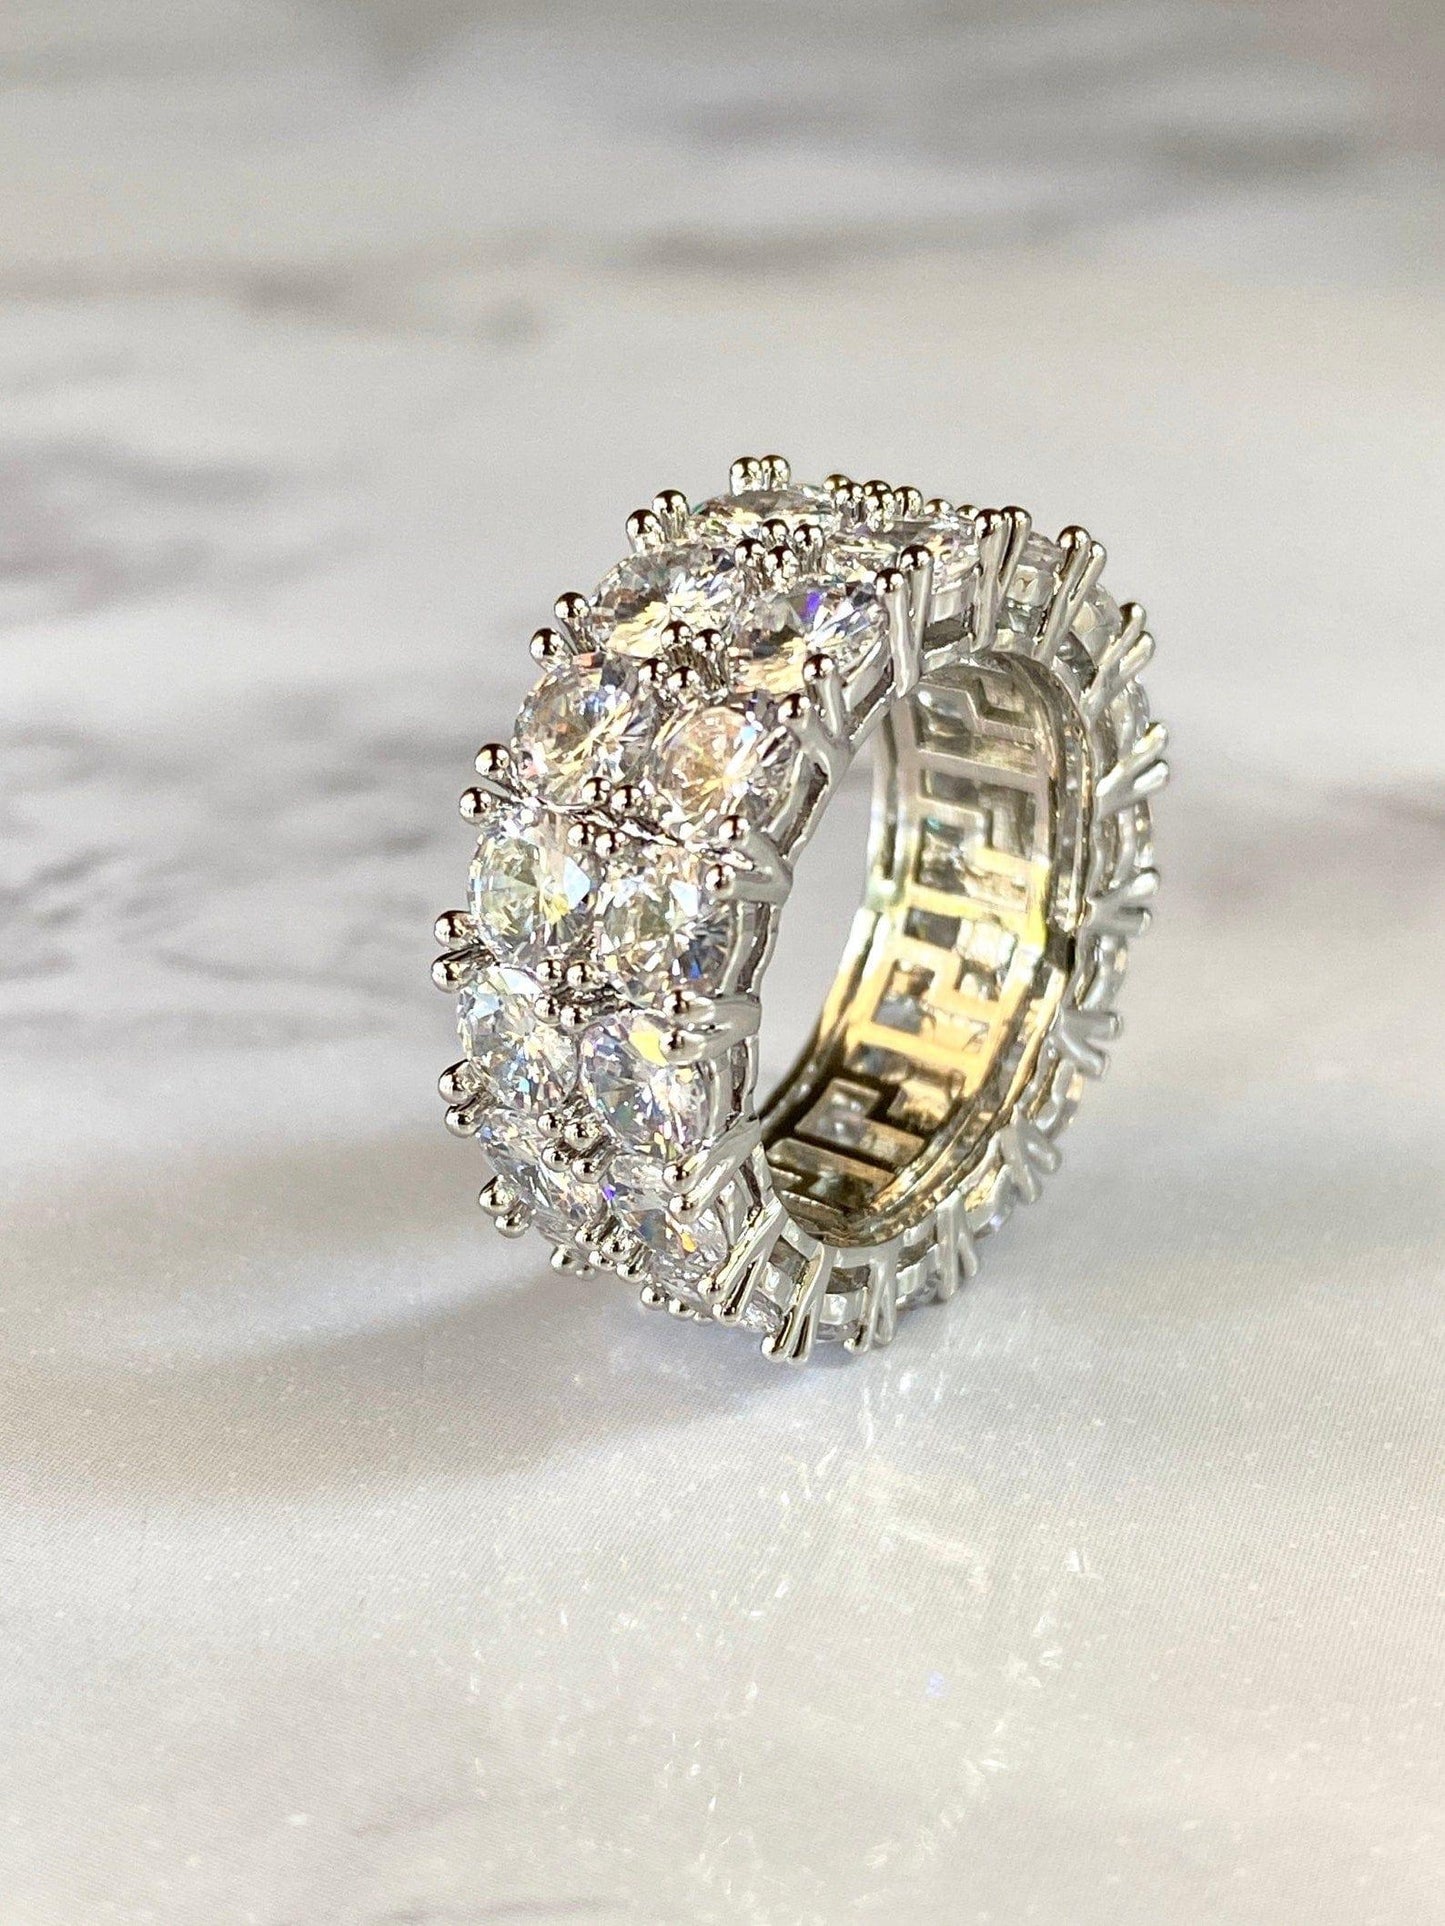 Tennis Band Ice out Silver 5X layered Designer Moissanite Diamond Ring band - JBR Jeweler